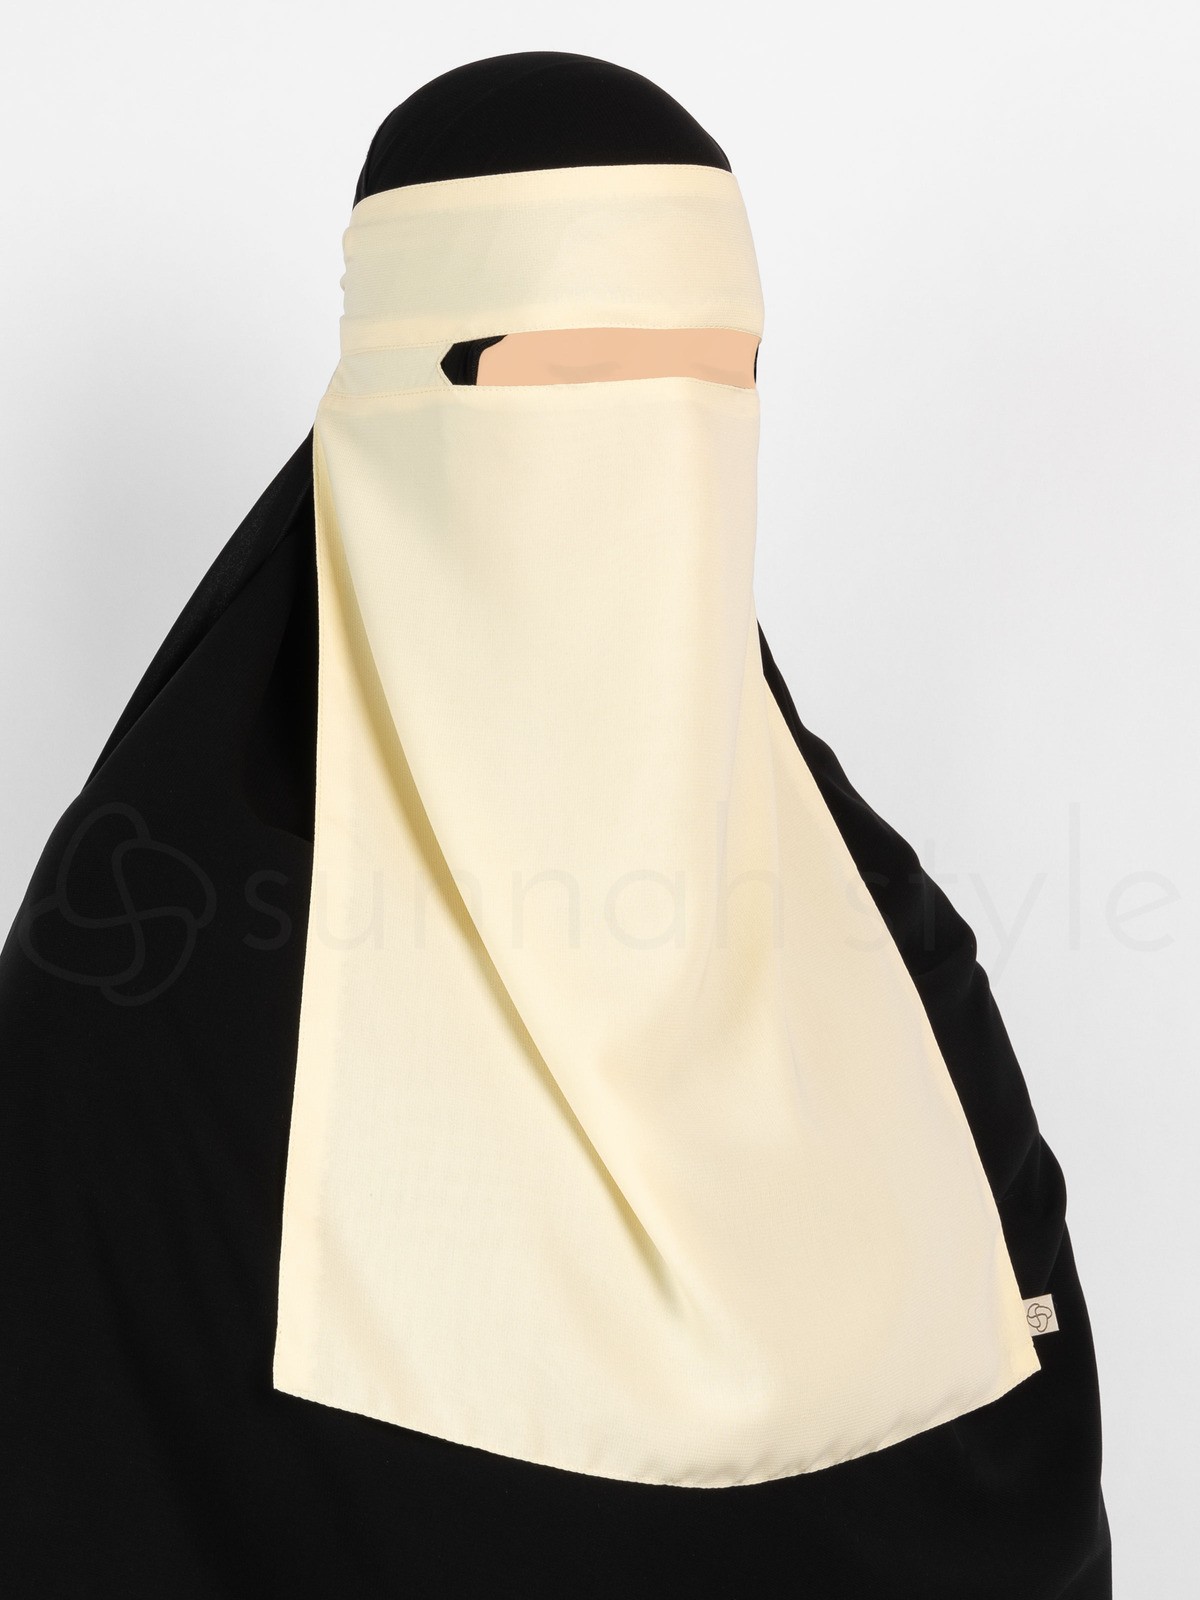 Sunnah Style - No-Pinch One Layer Niqab (Vanilla Cream)